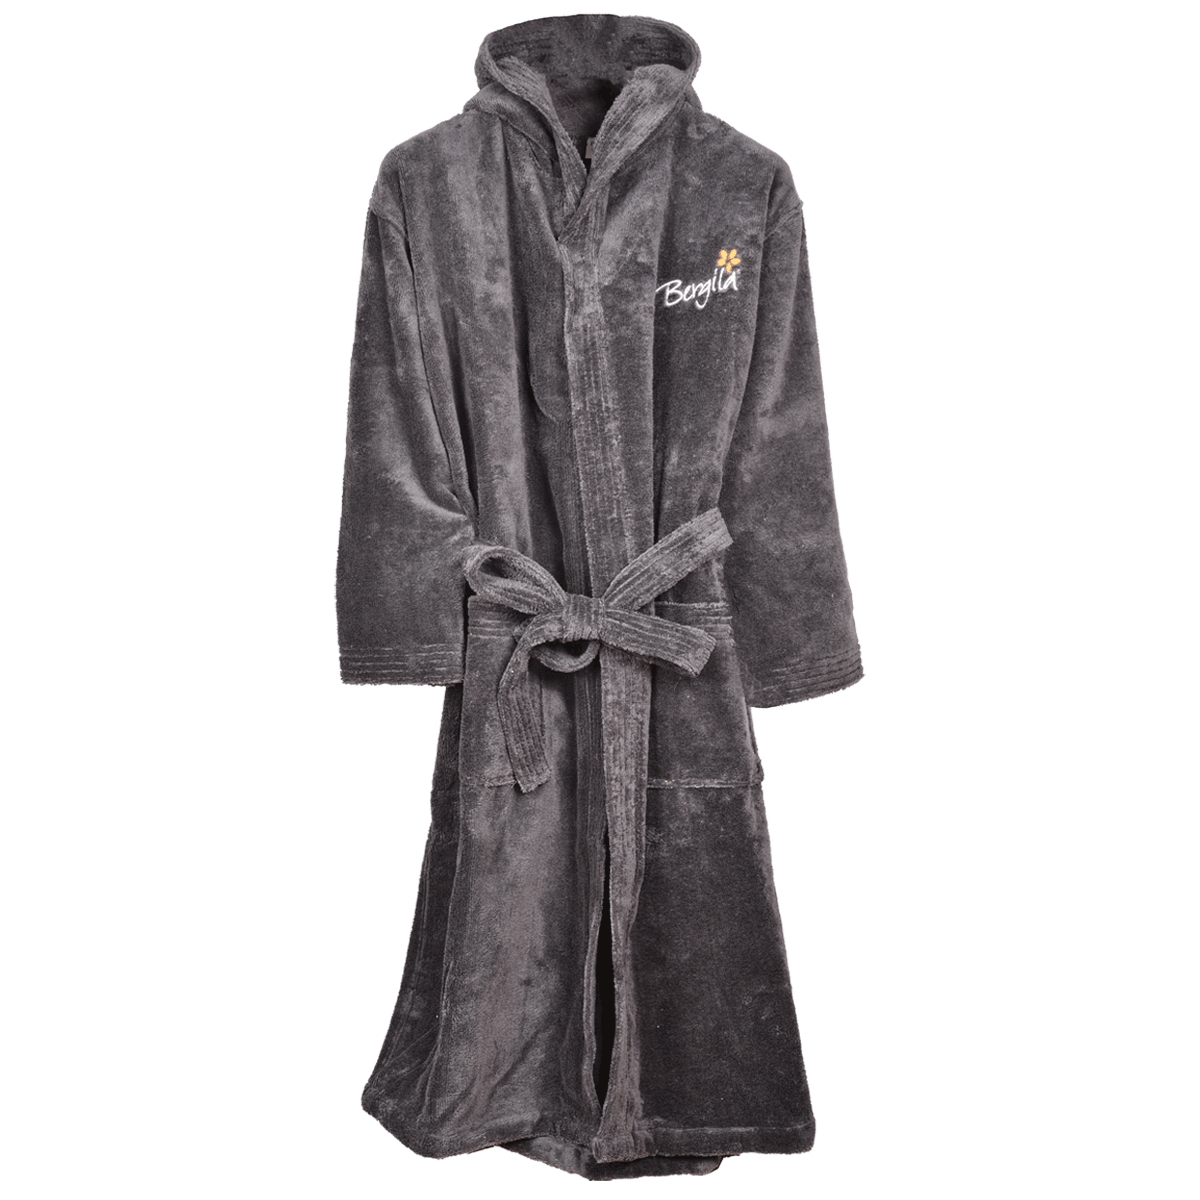 Anthracite bathrobe - size L